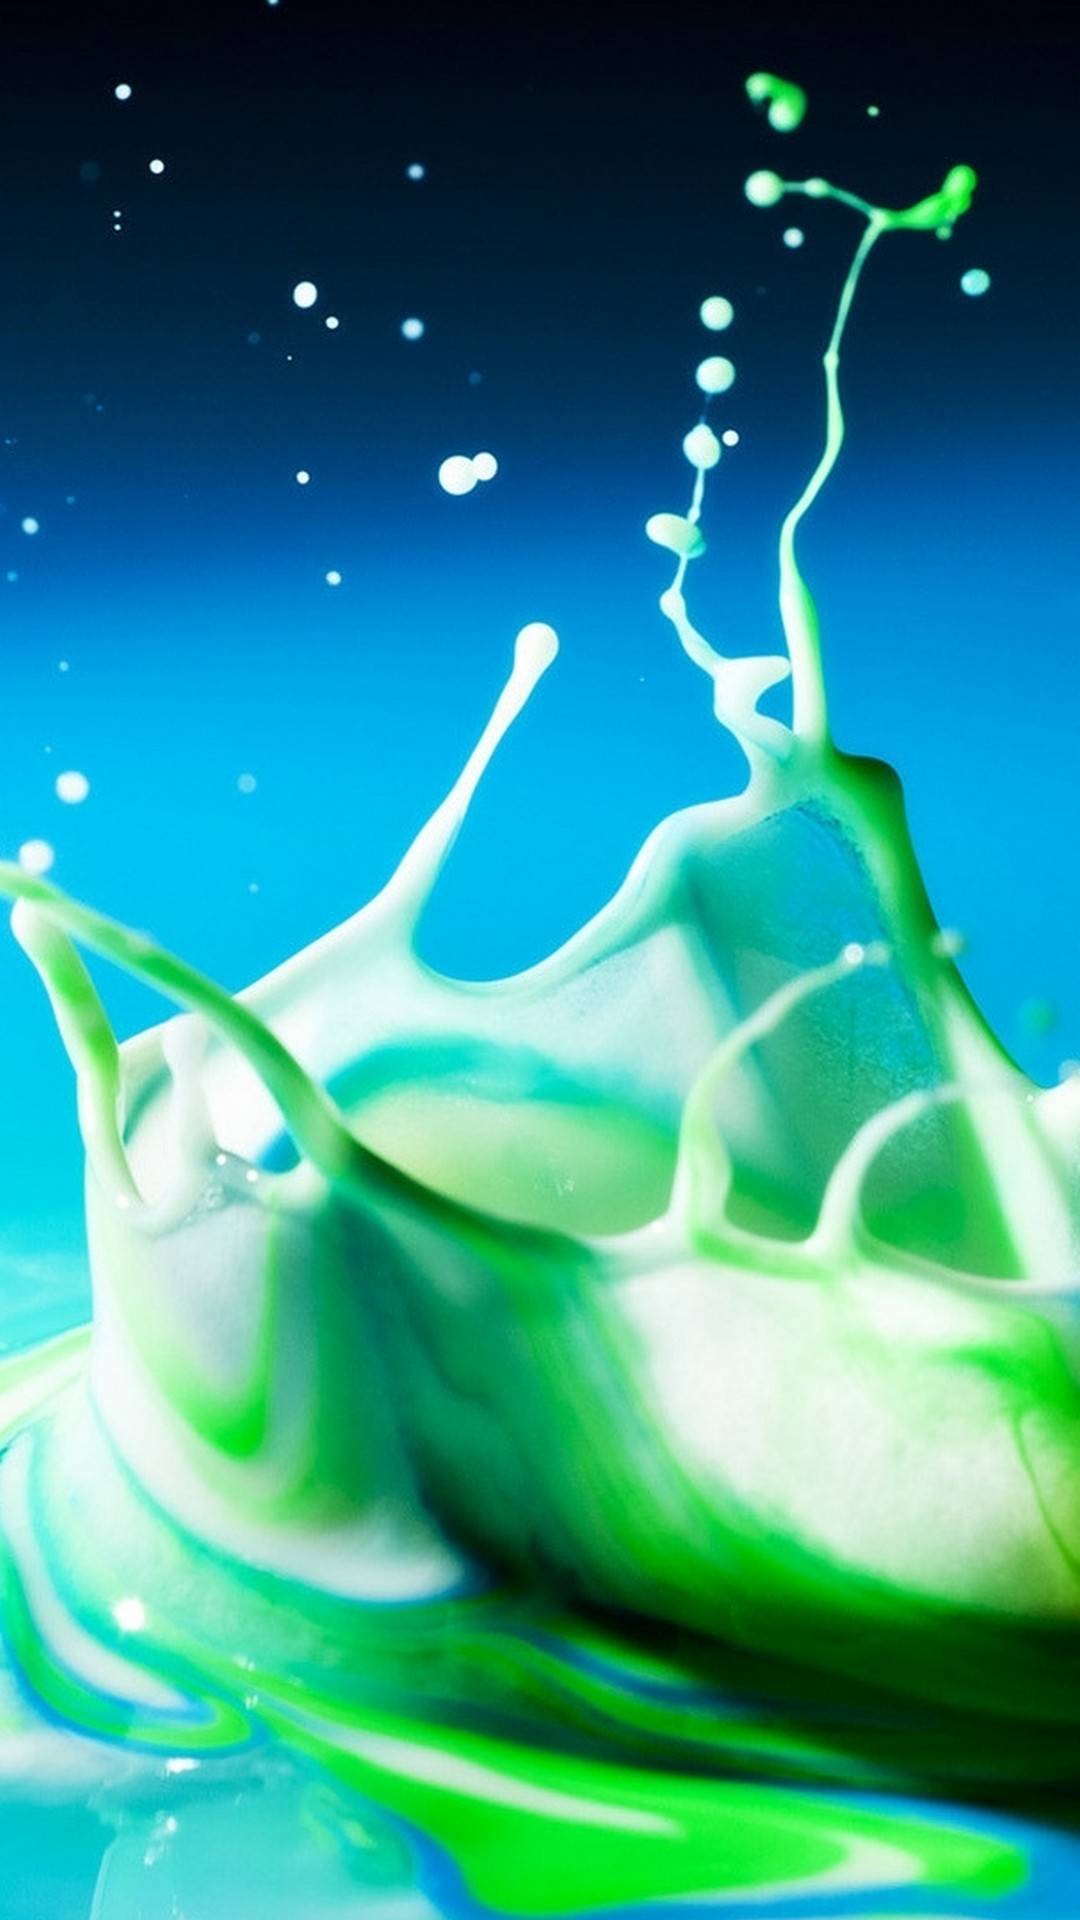 Milky Green Liquid Wallpaper iPhone X resolution 1080x1920